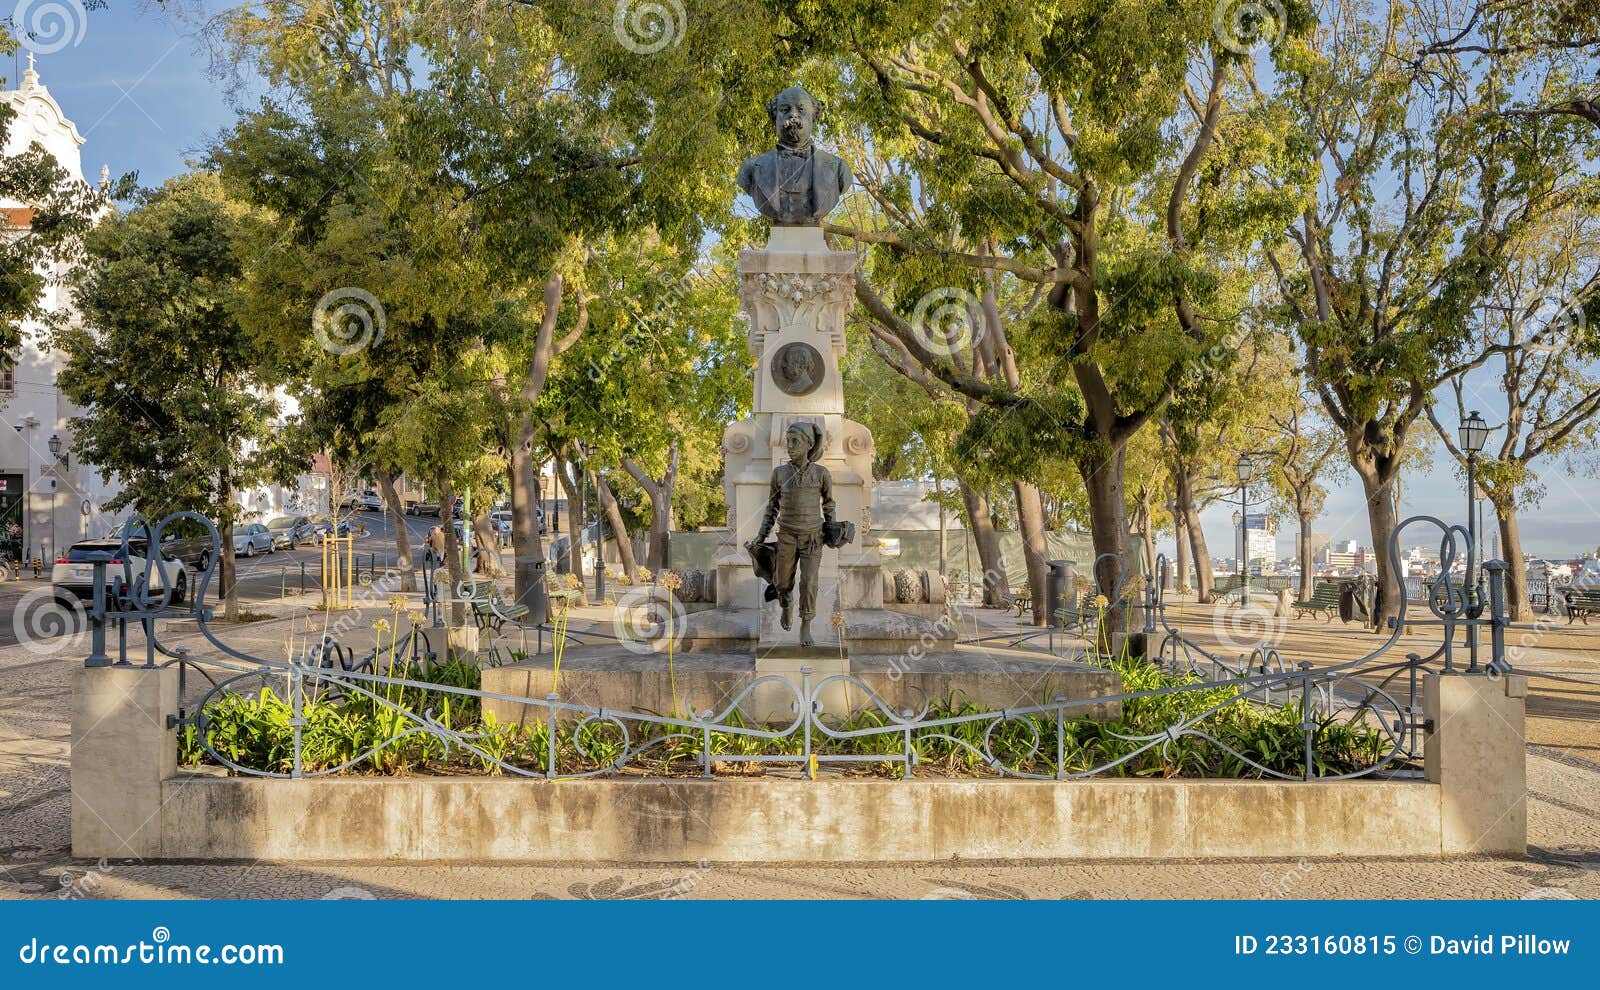 monument to eduardo coelho, founder of the popular newspaer diario de noticias in 1864, located in lisbon, portugal.